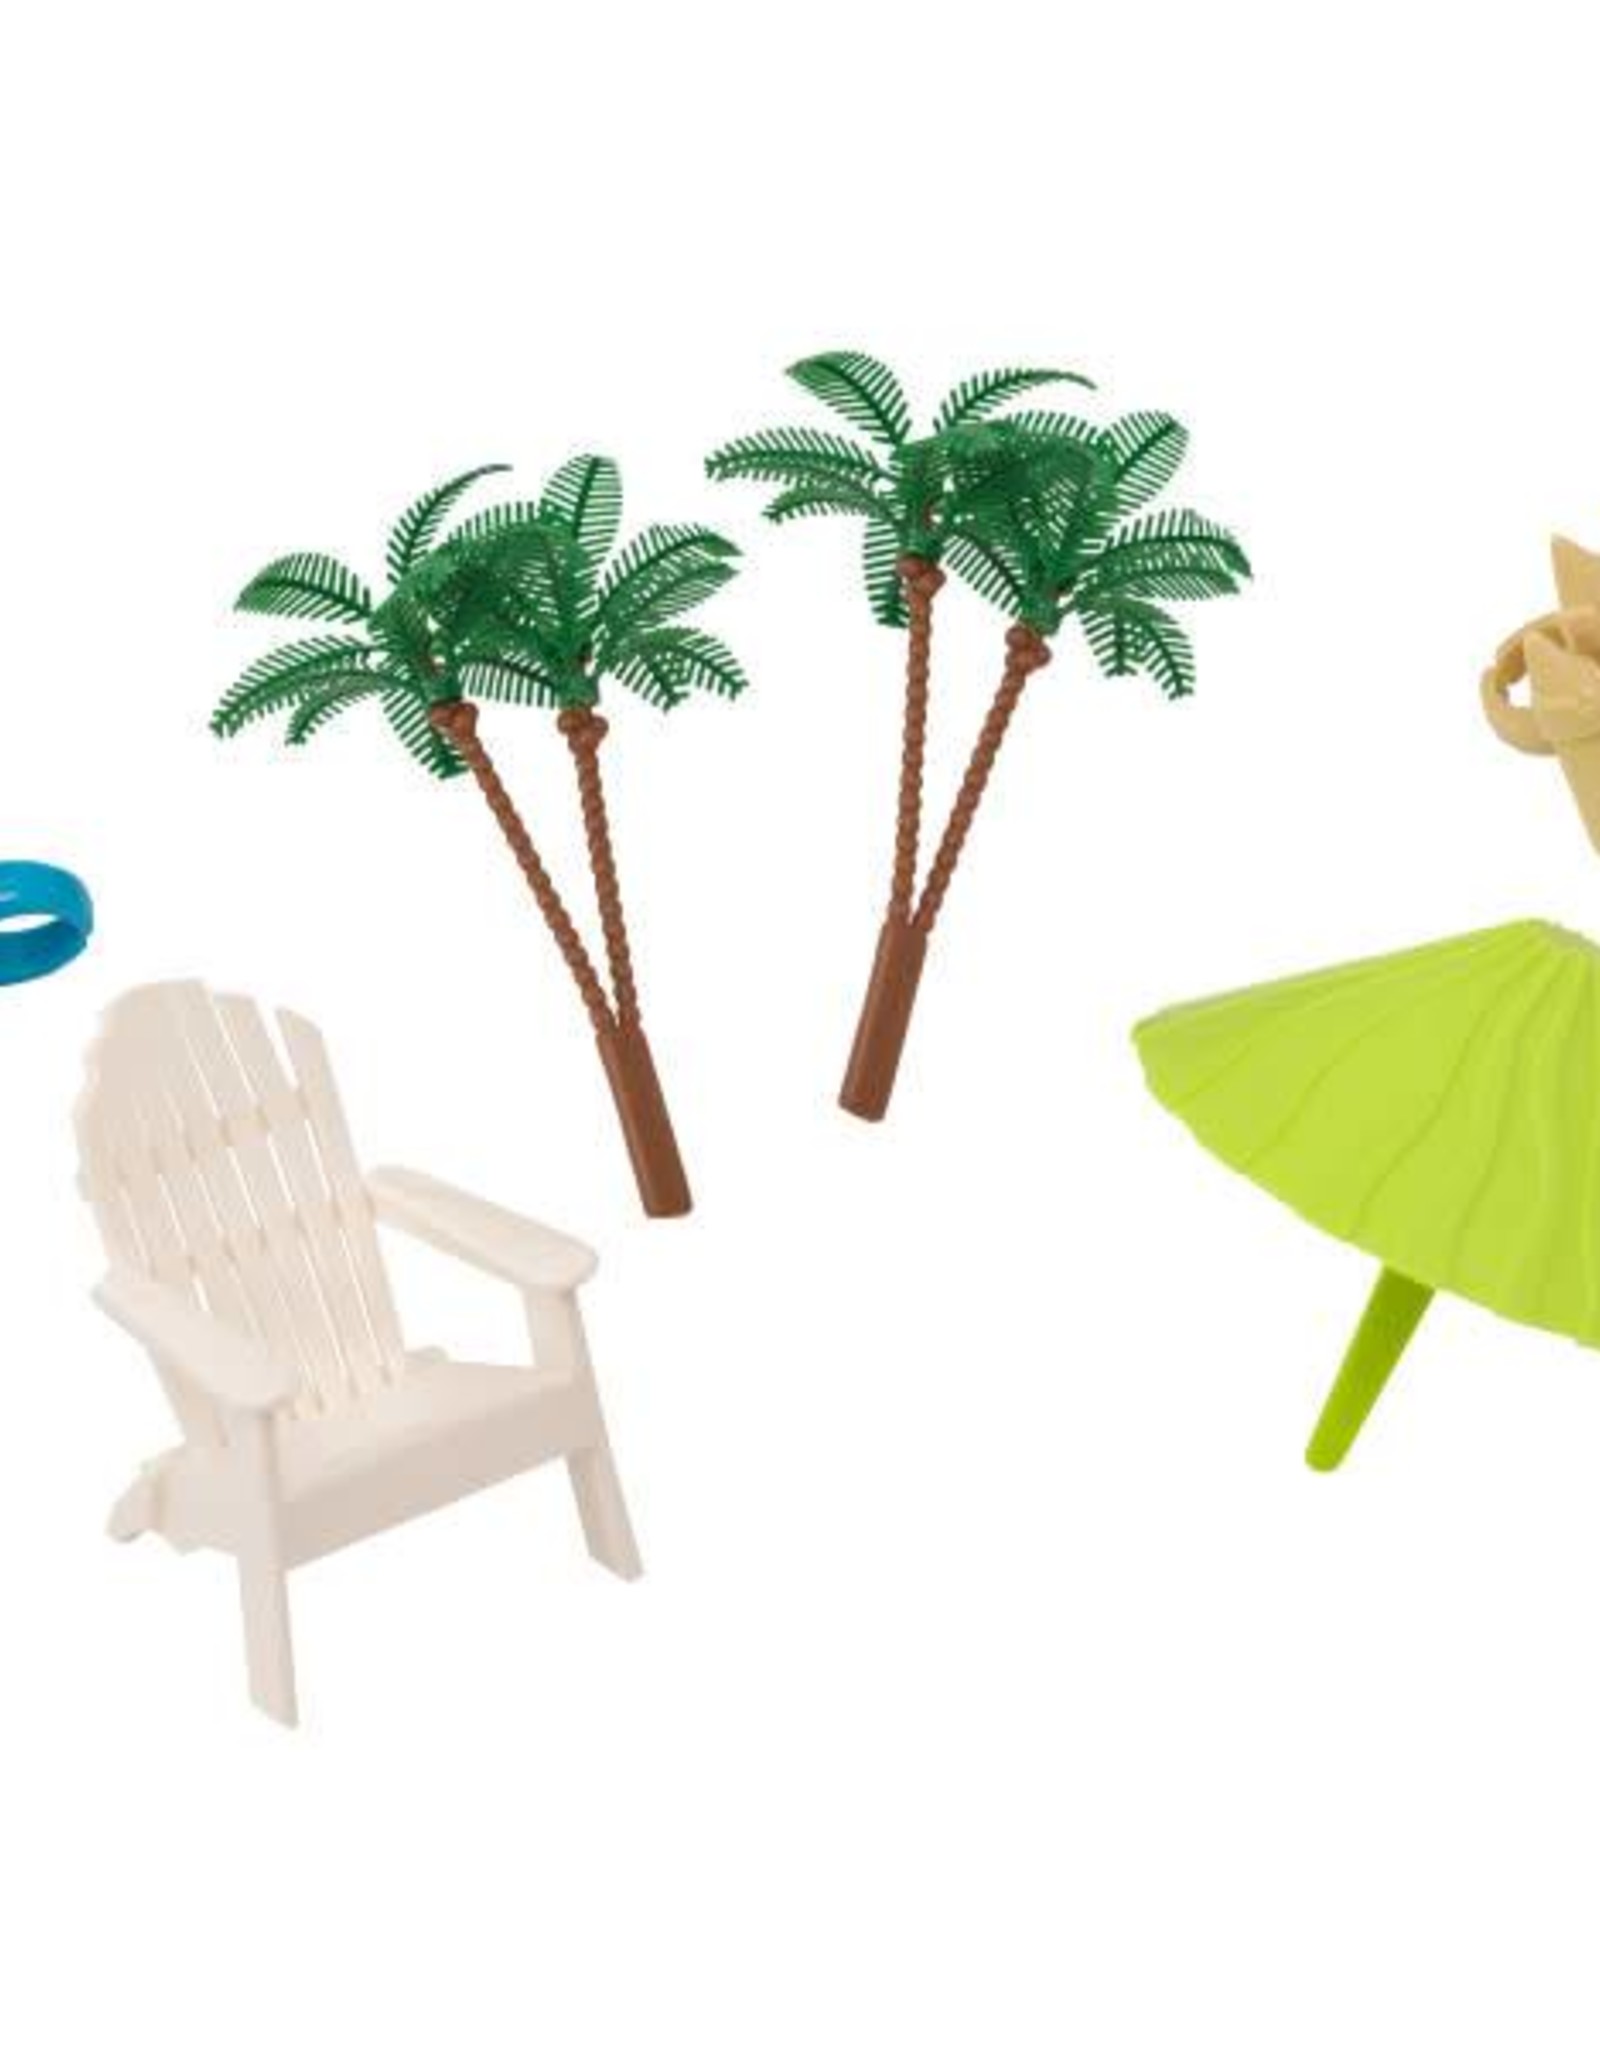 Beach Chair and Umbrella Cake Topper Set